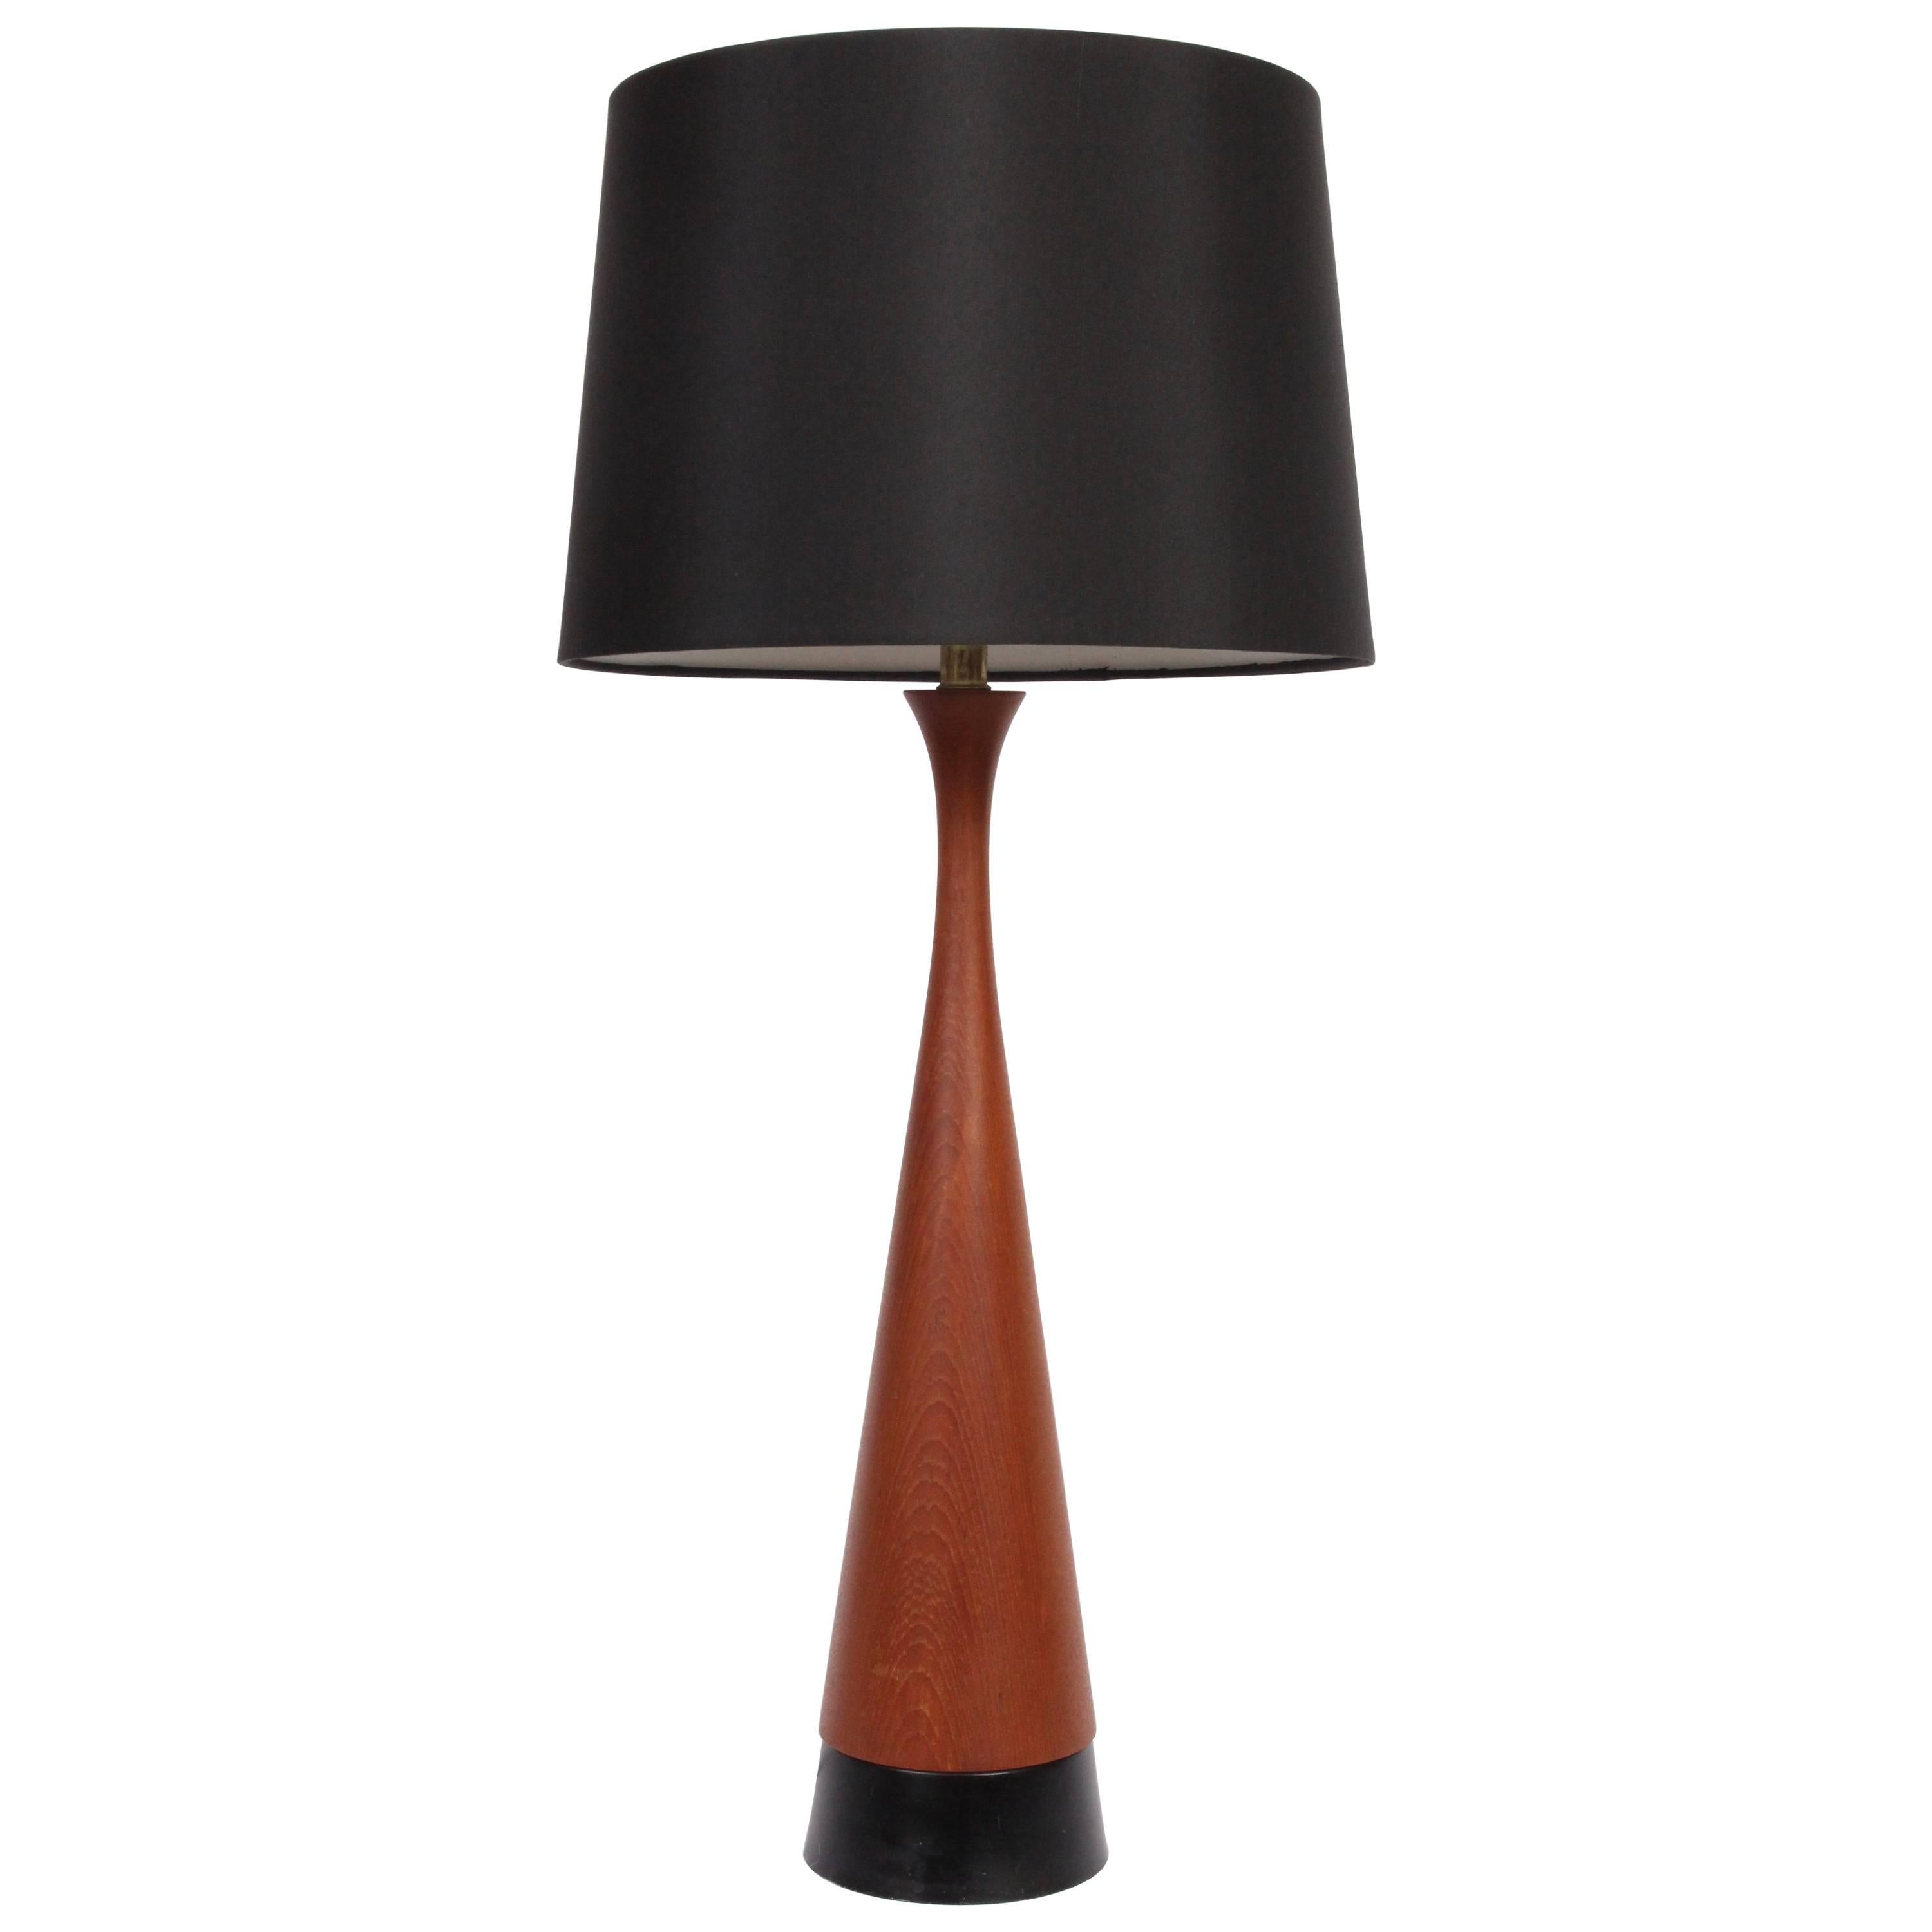 Tall Danish Modern Diablo Teak Table Lamp with Black Enamel Base, c. 1960 For Sale